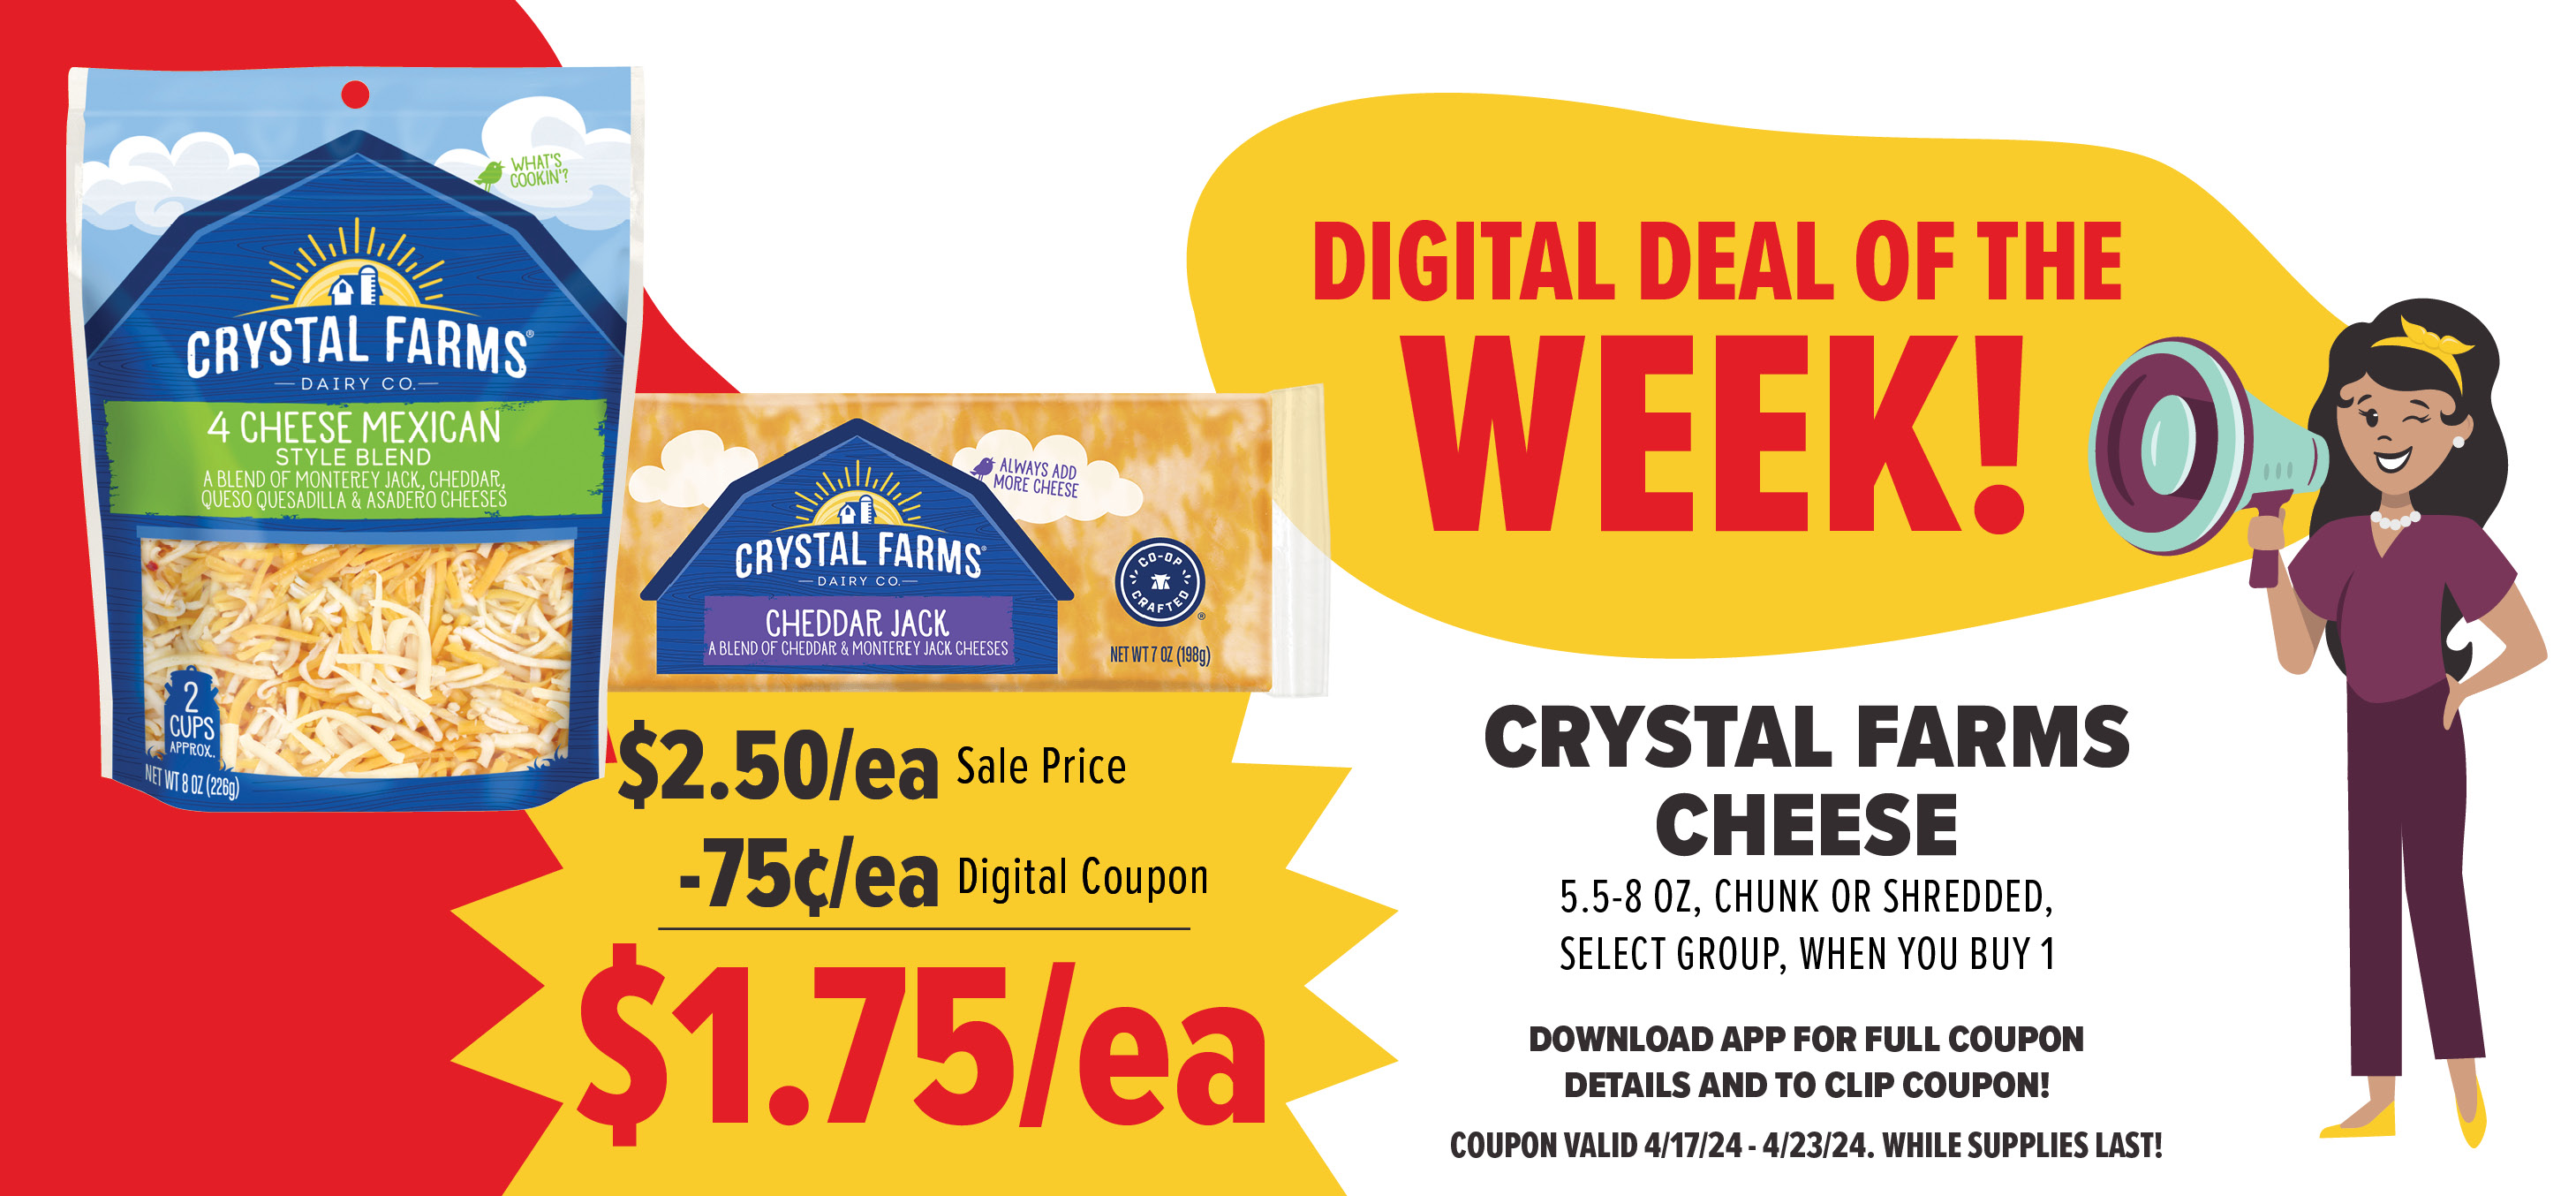 Digital Deal of the Week, Crystal Farms Cheese